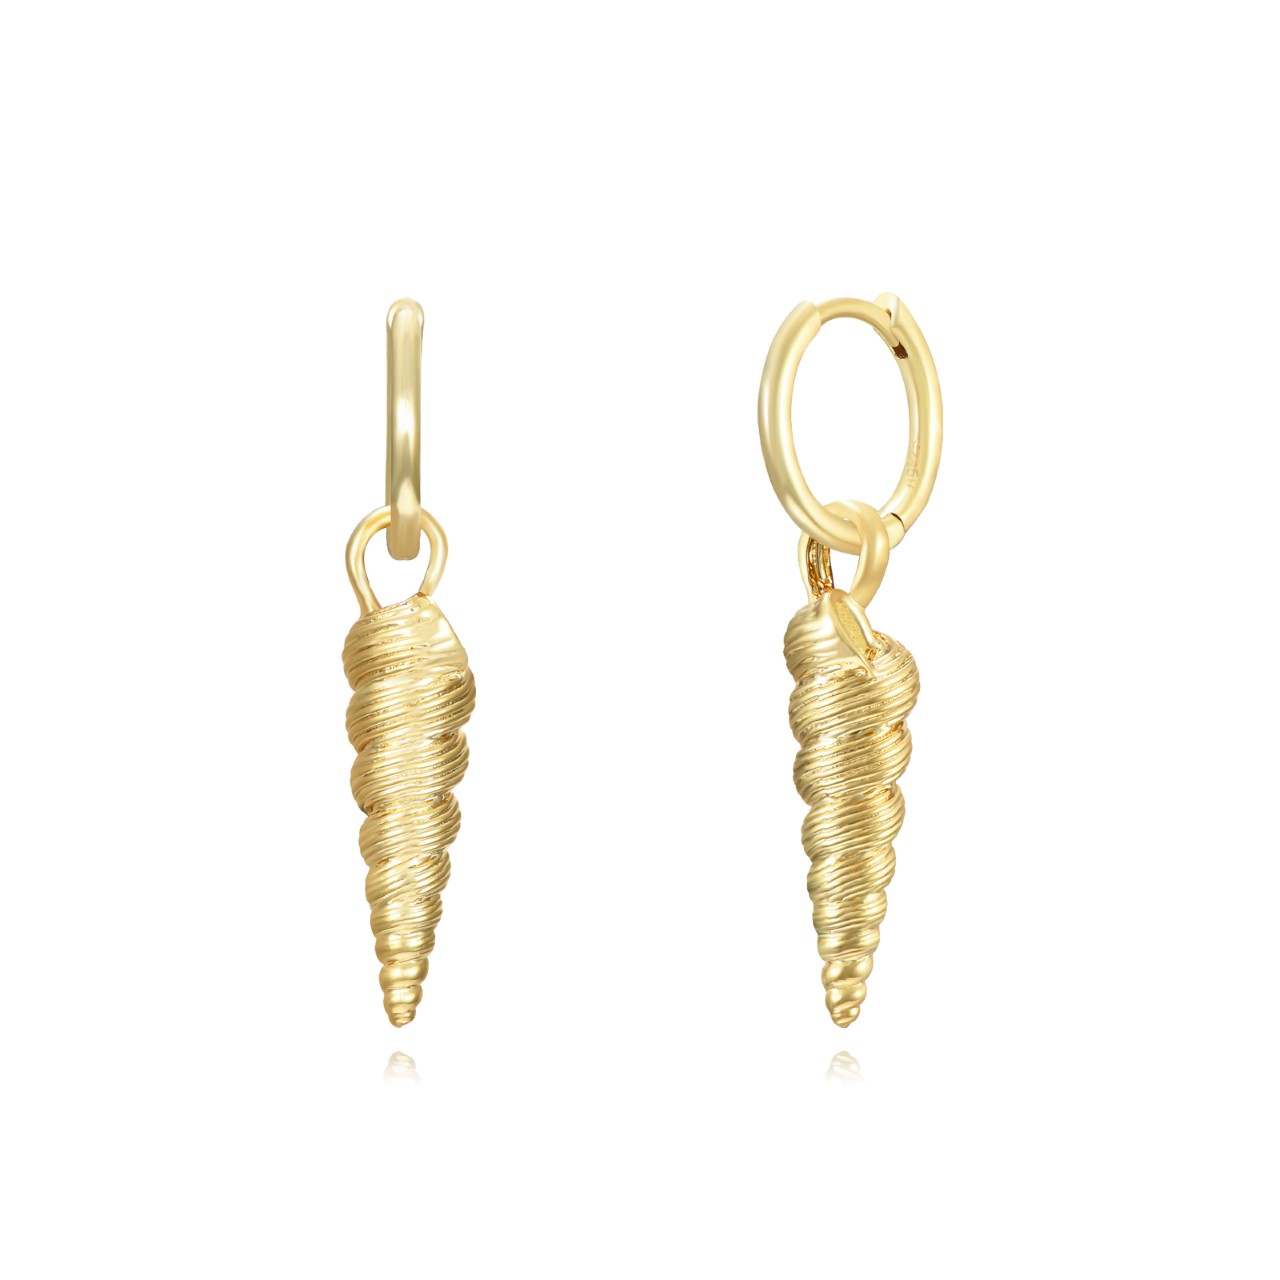 Pendiente Plata Lisa Earrings Shell 21,50*6mm - Hoop Ext 13mm(int 10mm) - Gold plated